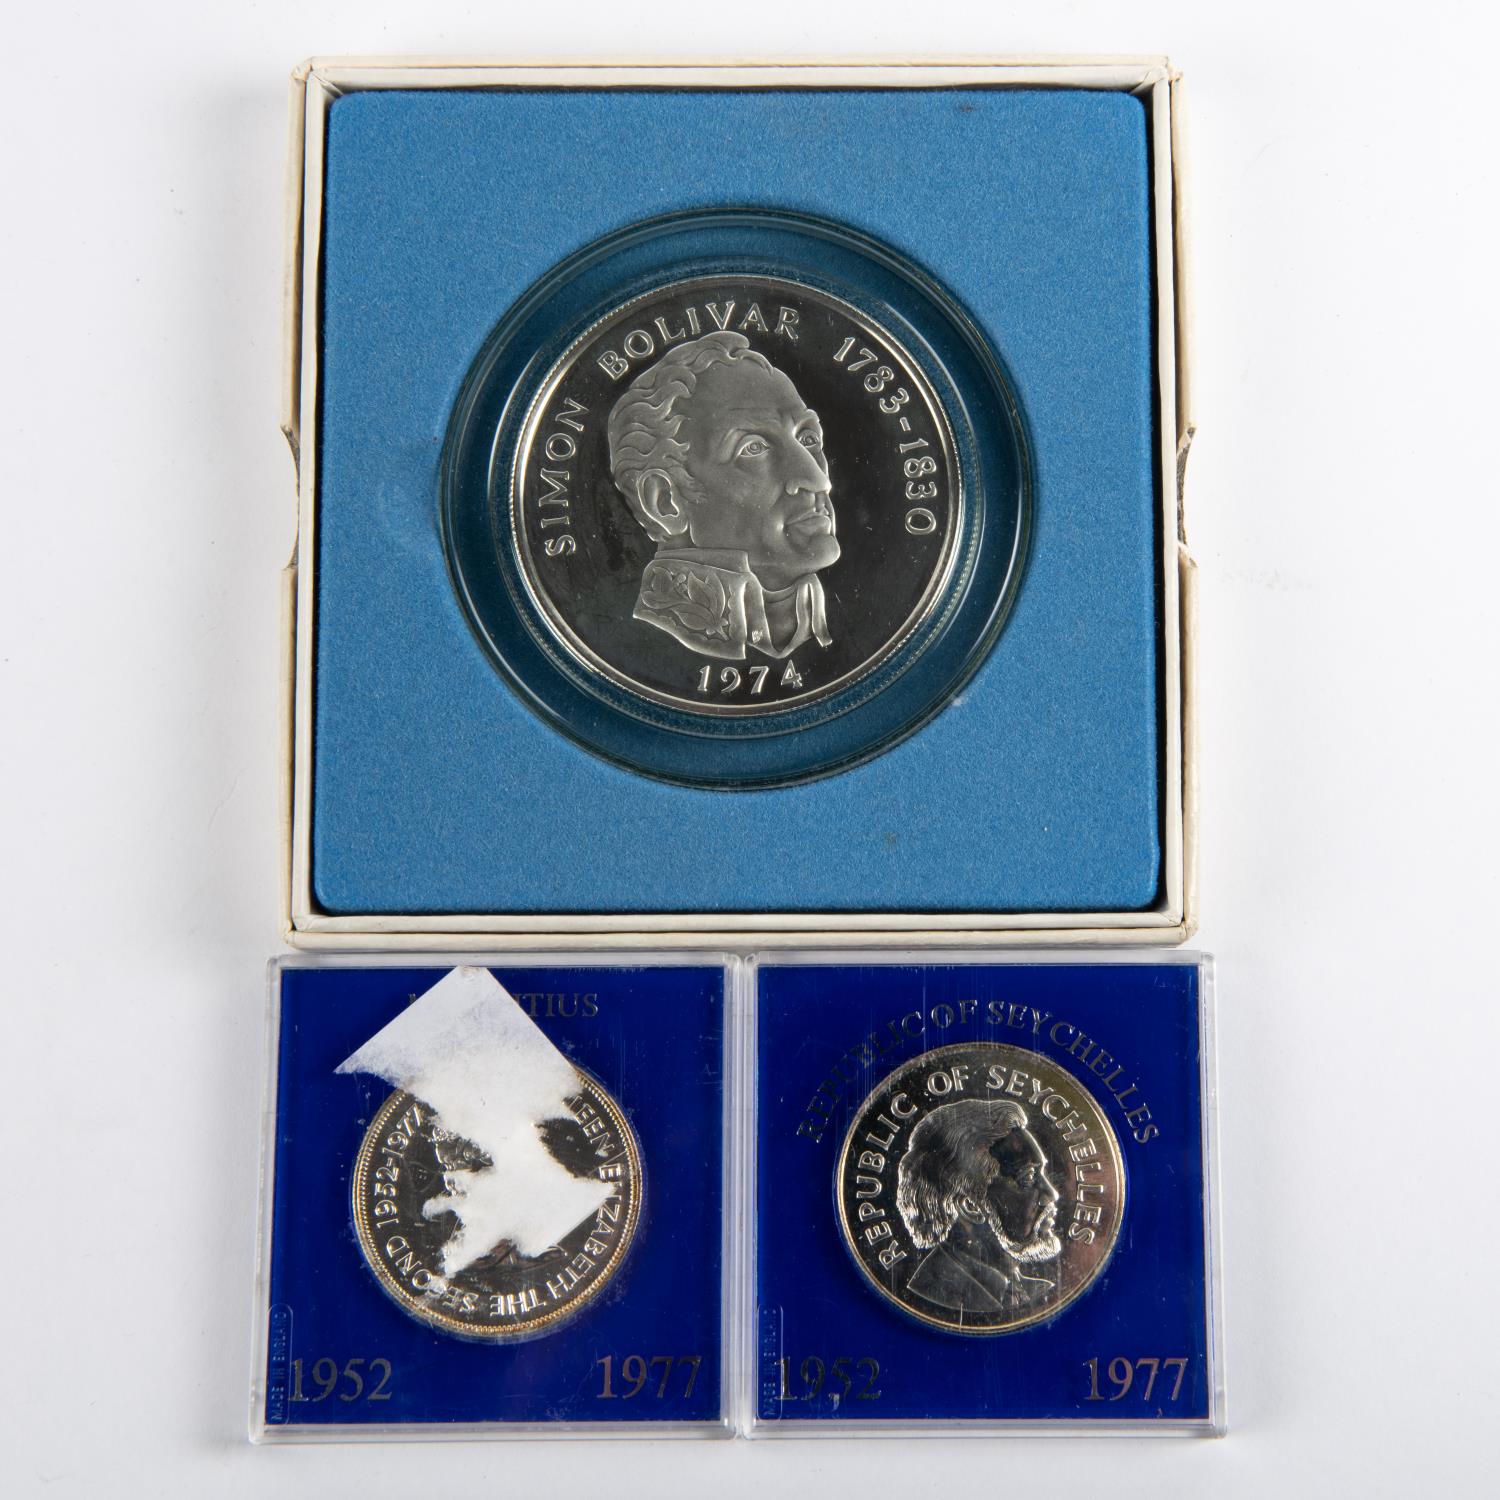 Republic of Panama AR 20 Balboas 1974 Proof coin, Unc in original box. Seychelles AR 25 Rupees for